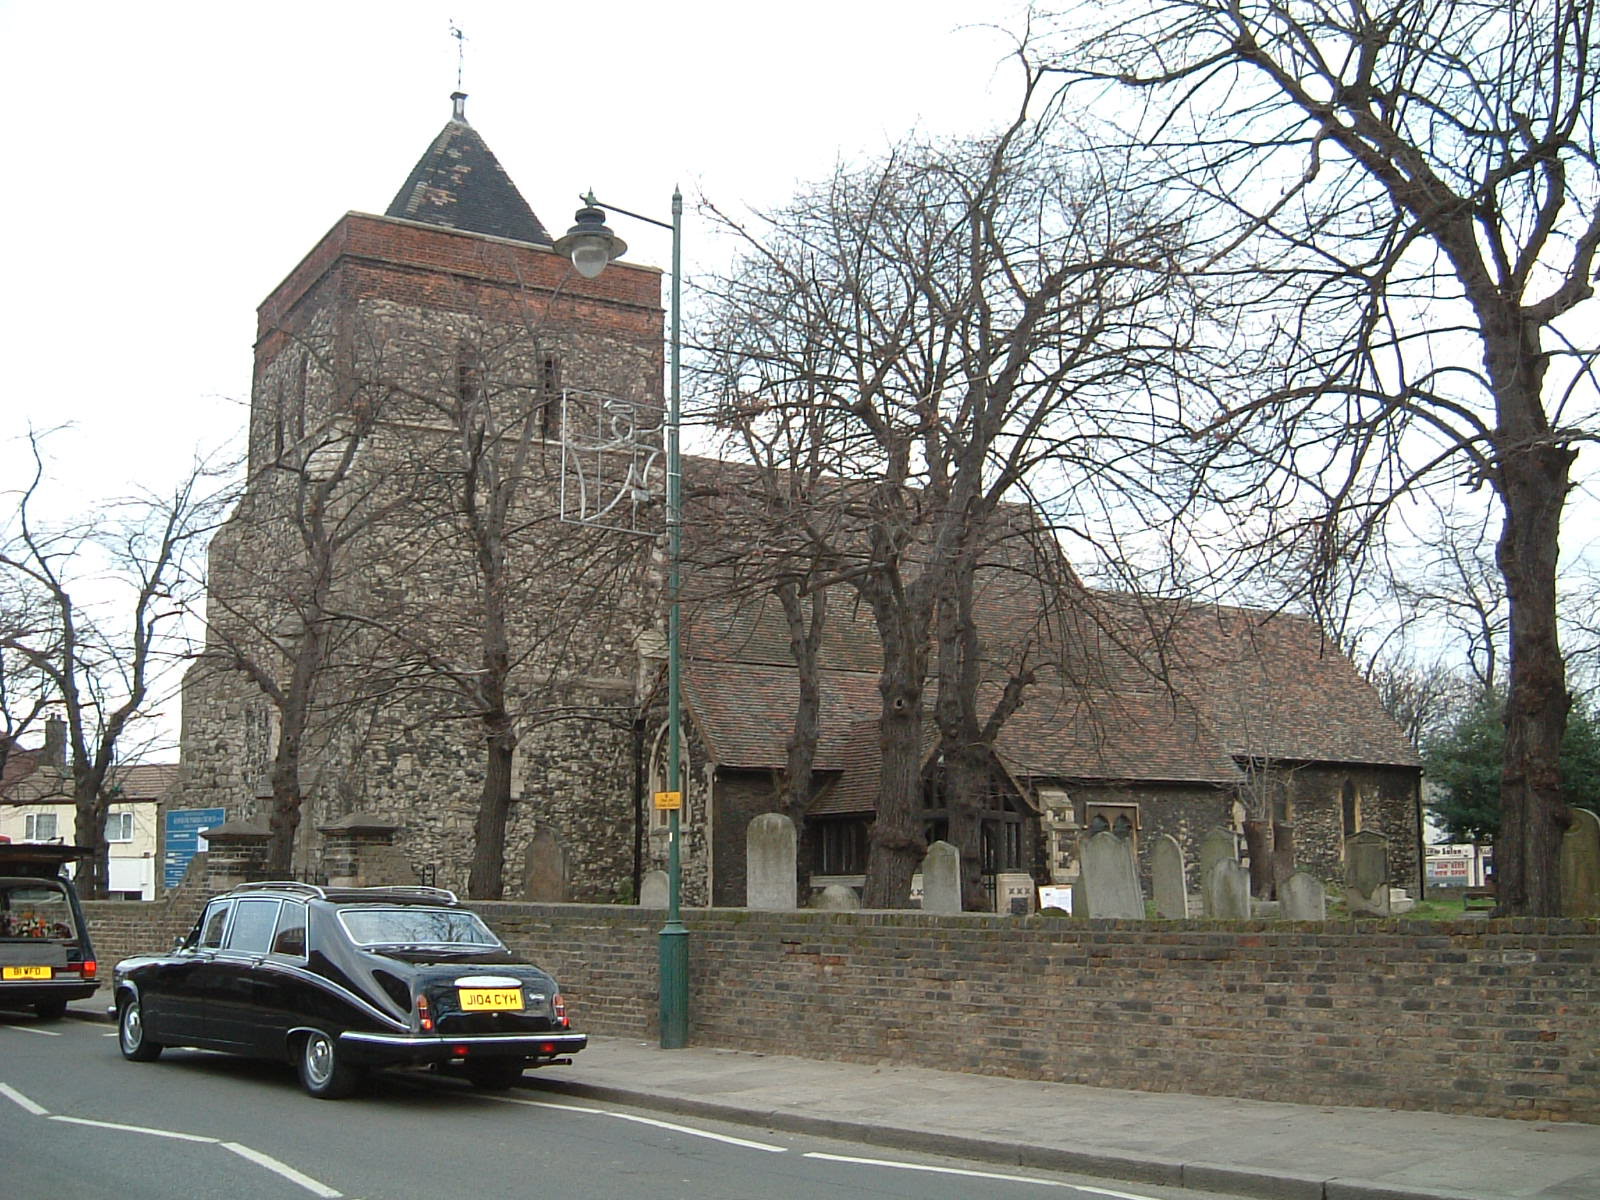 The Church of St Helen and St Giles, Rainham